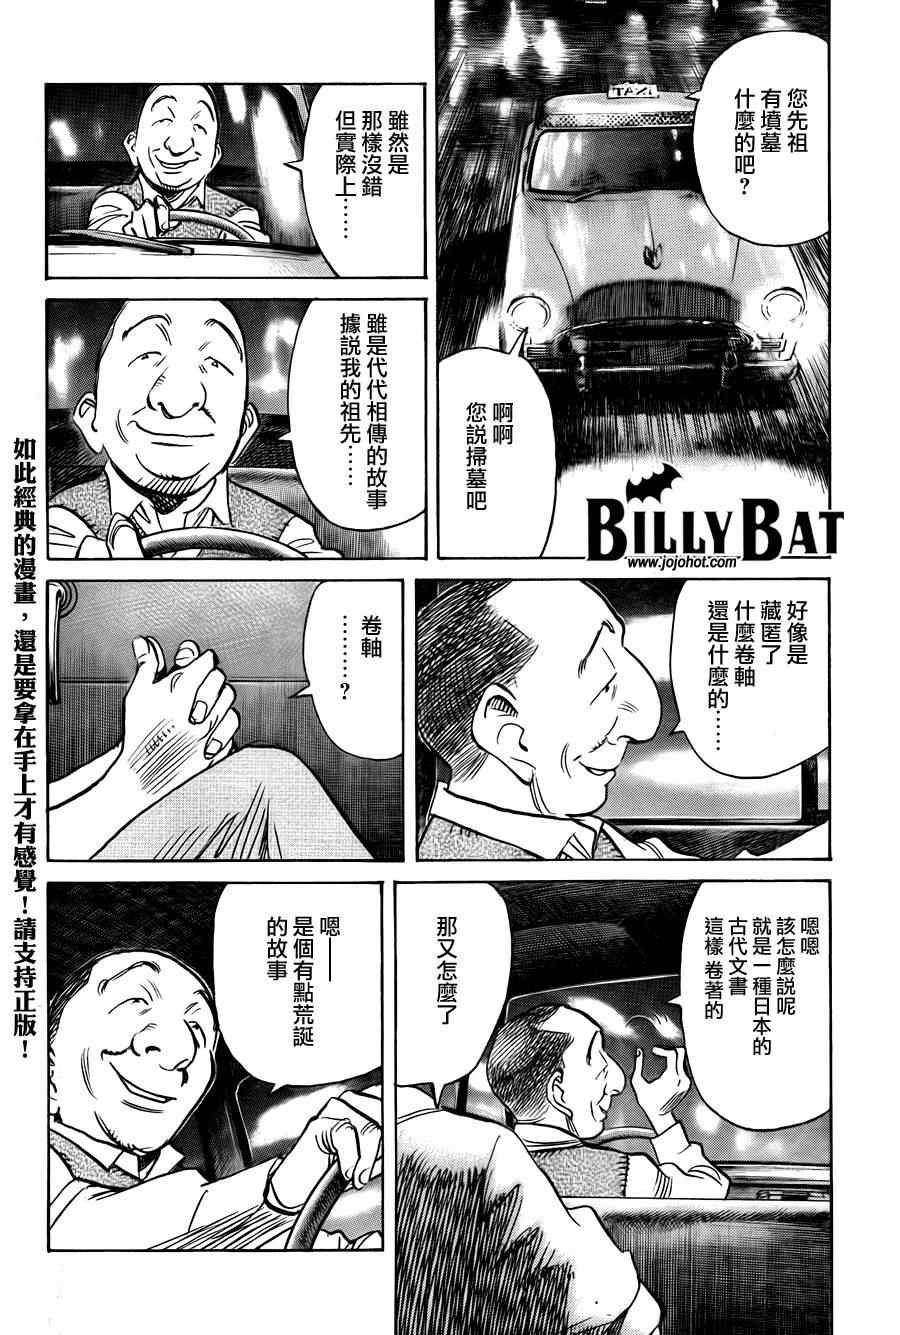 Billy_Bat - 第63话 - 3